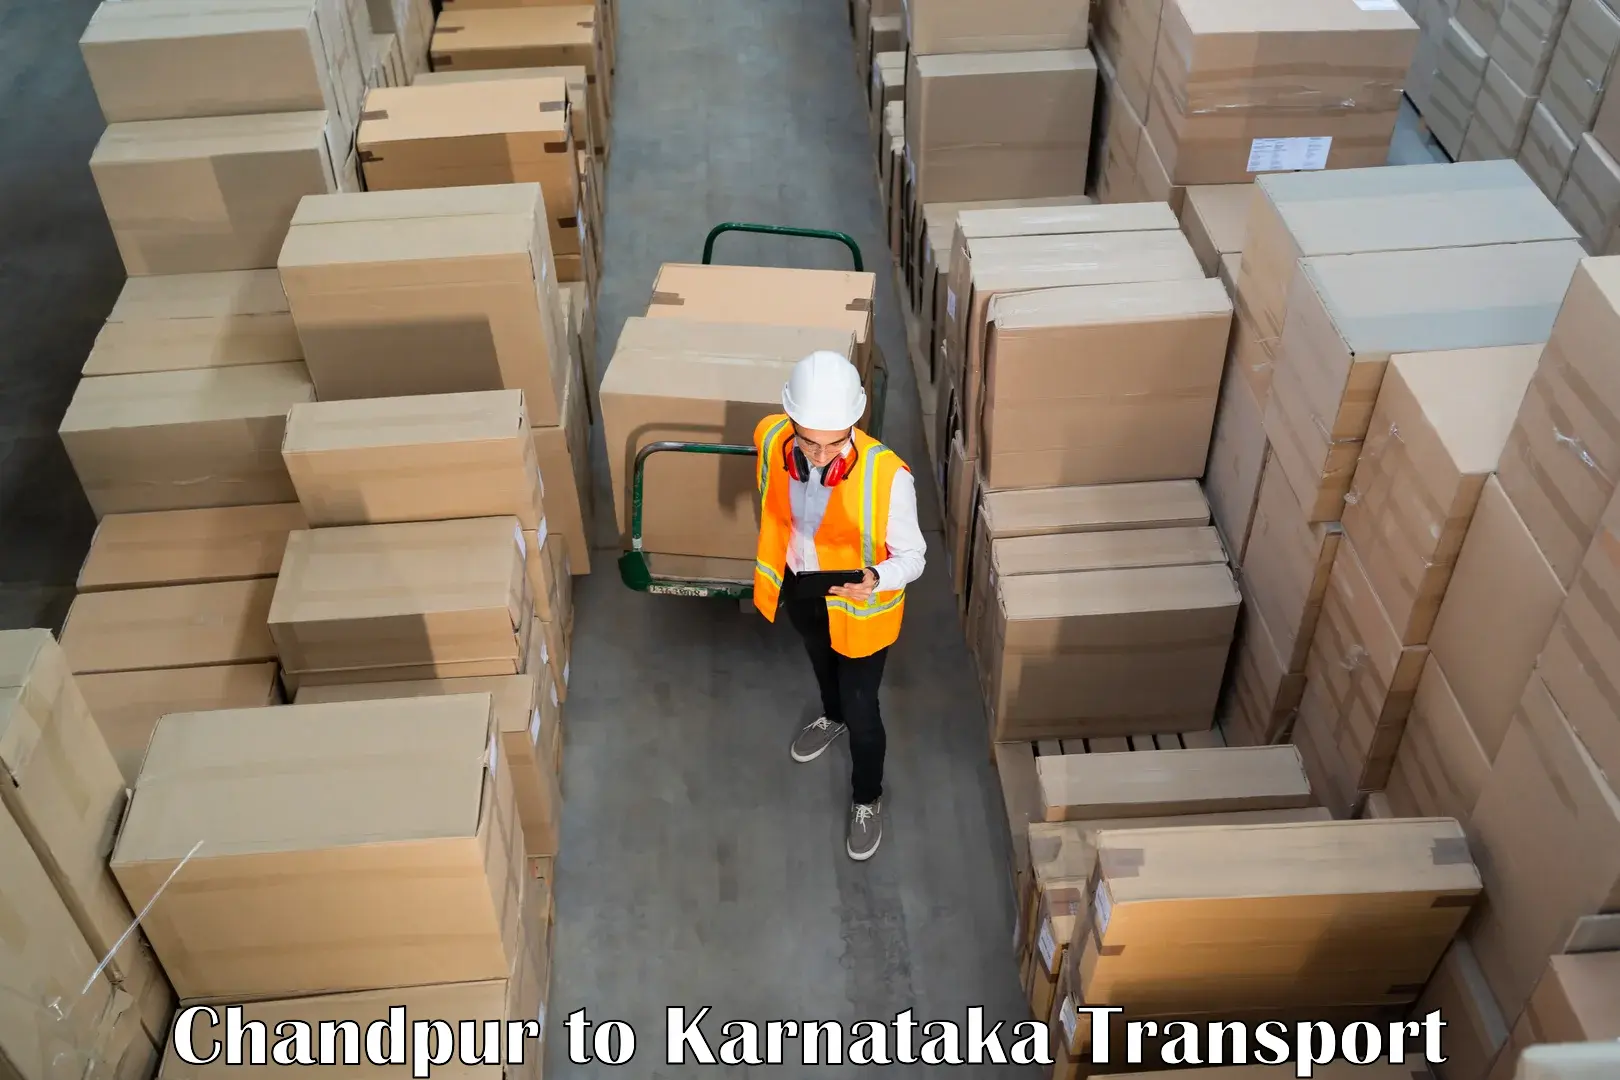 Shipping partner Chandpur to Haliyal